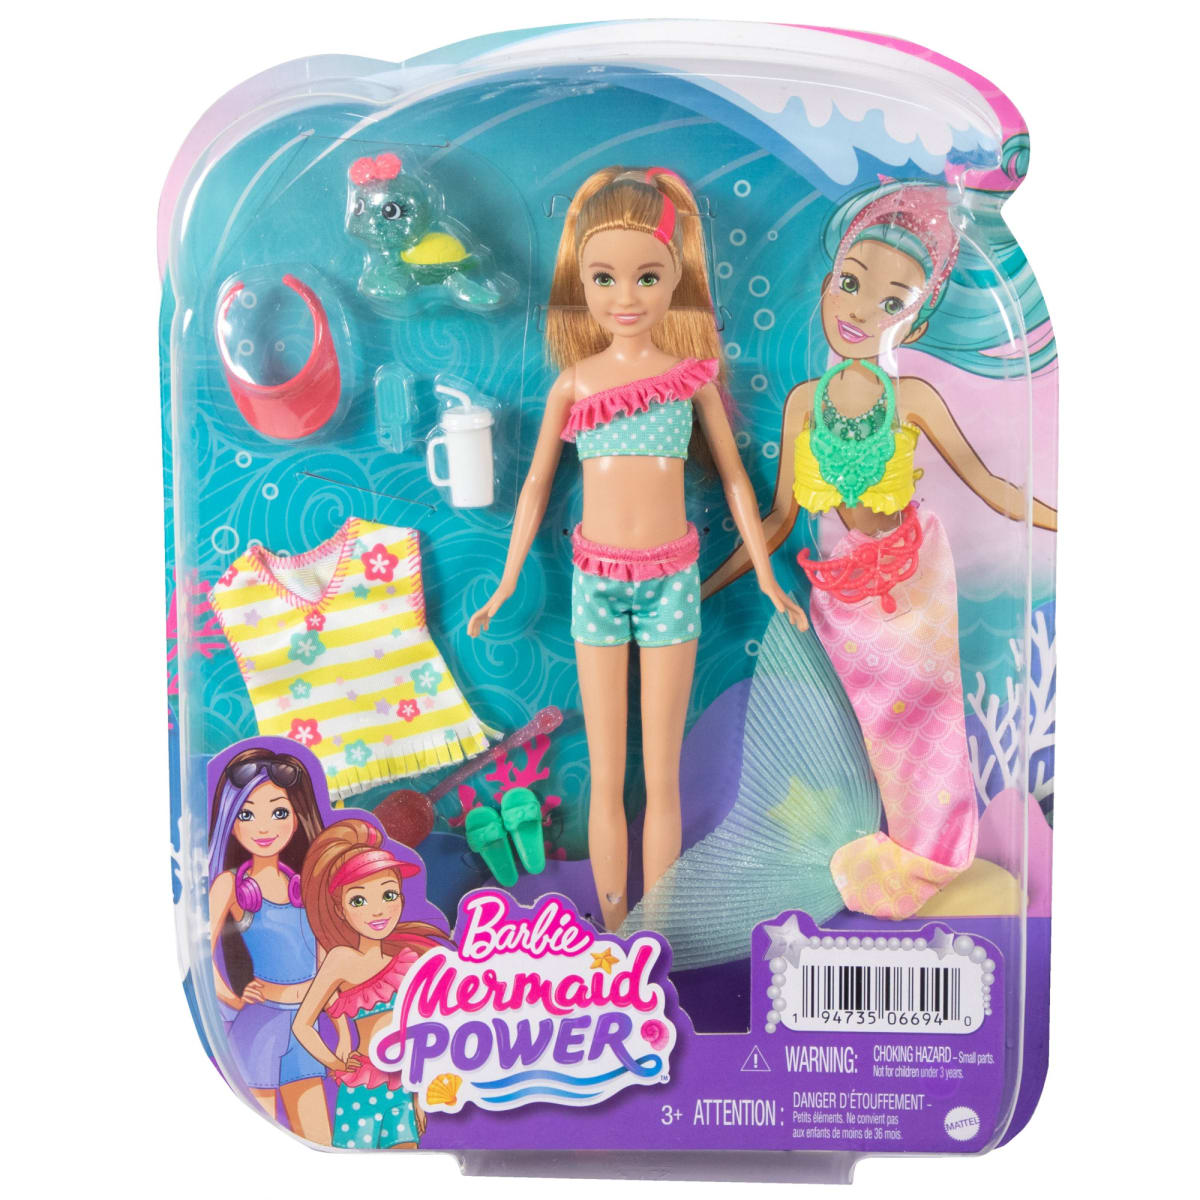 Barbie Dress Up Stacie nukke  verkkokauppa